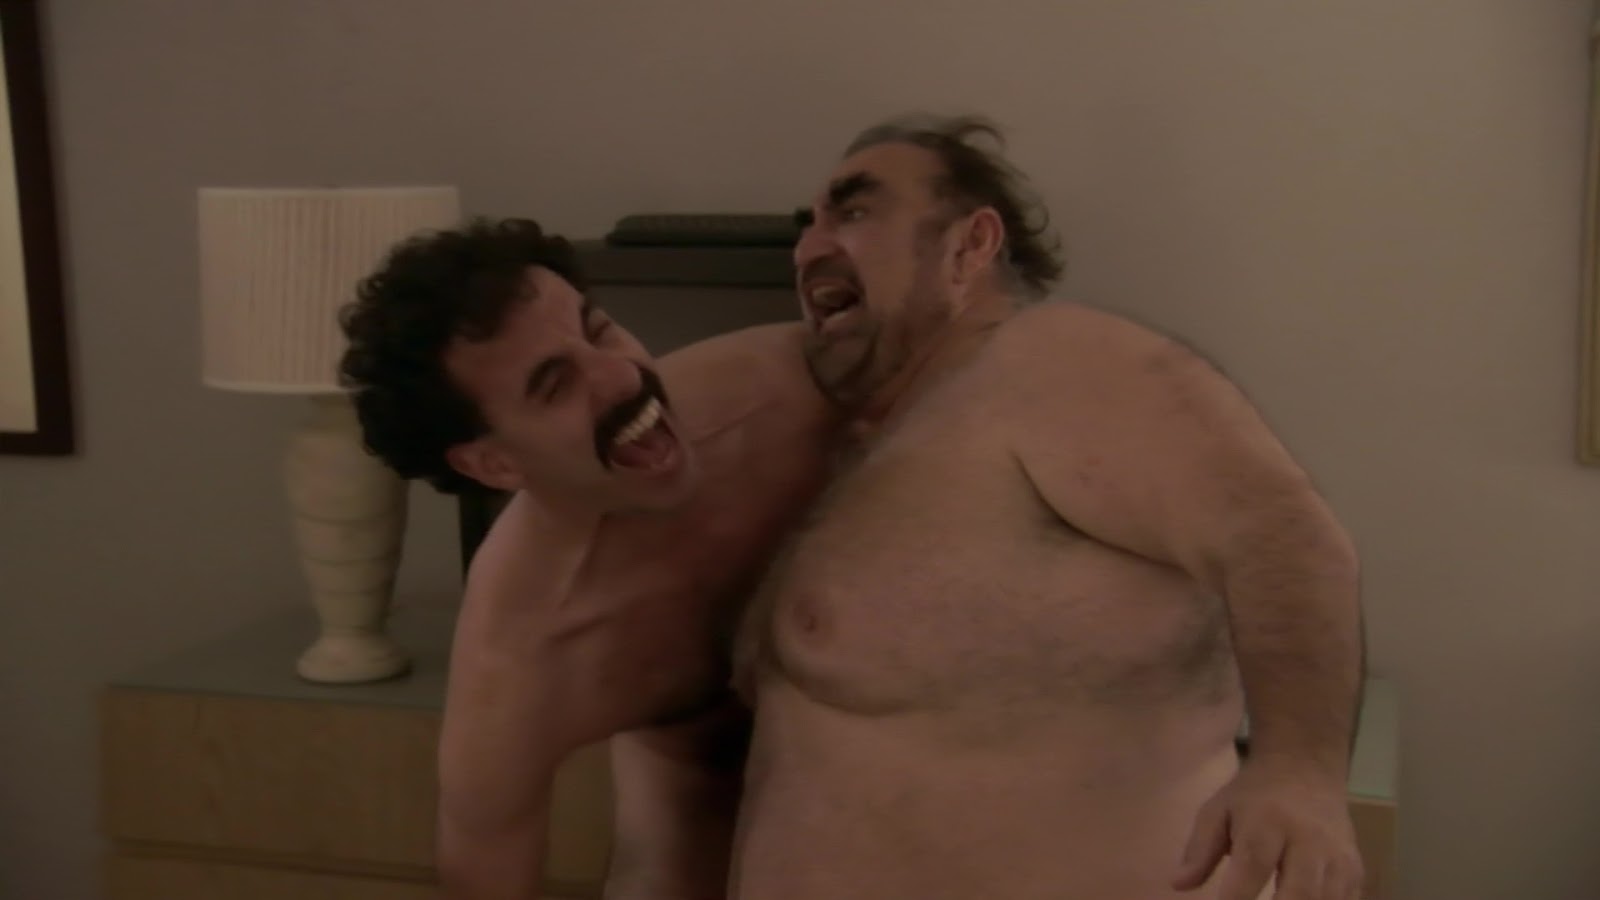 Sacha Baron Cohen and Ken Davitian nude in Borat.